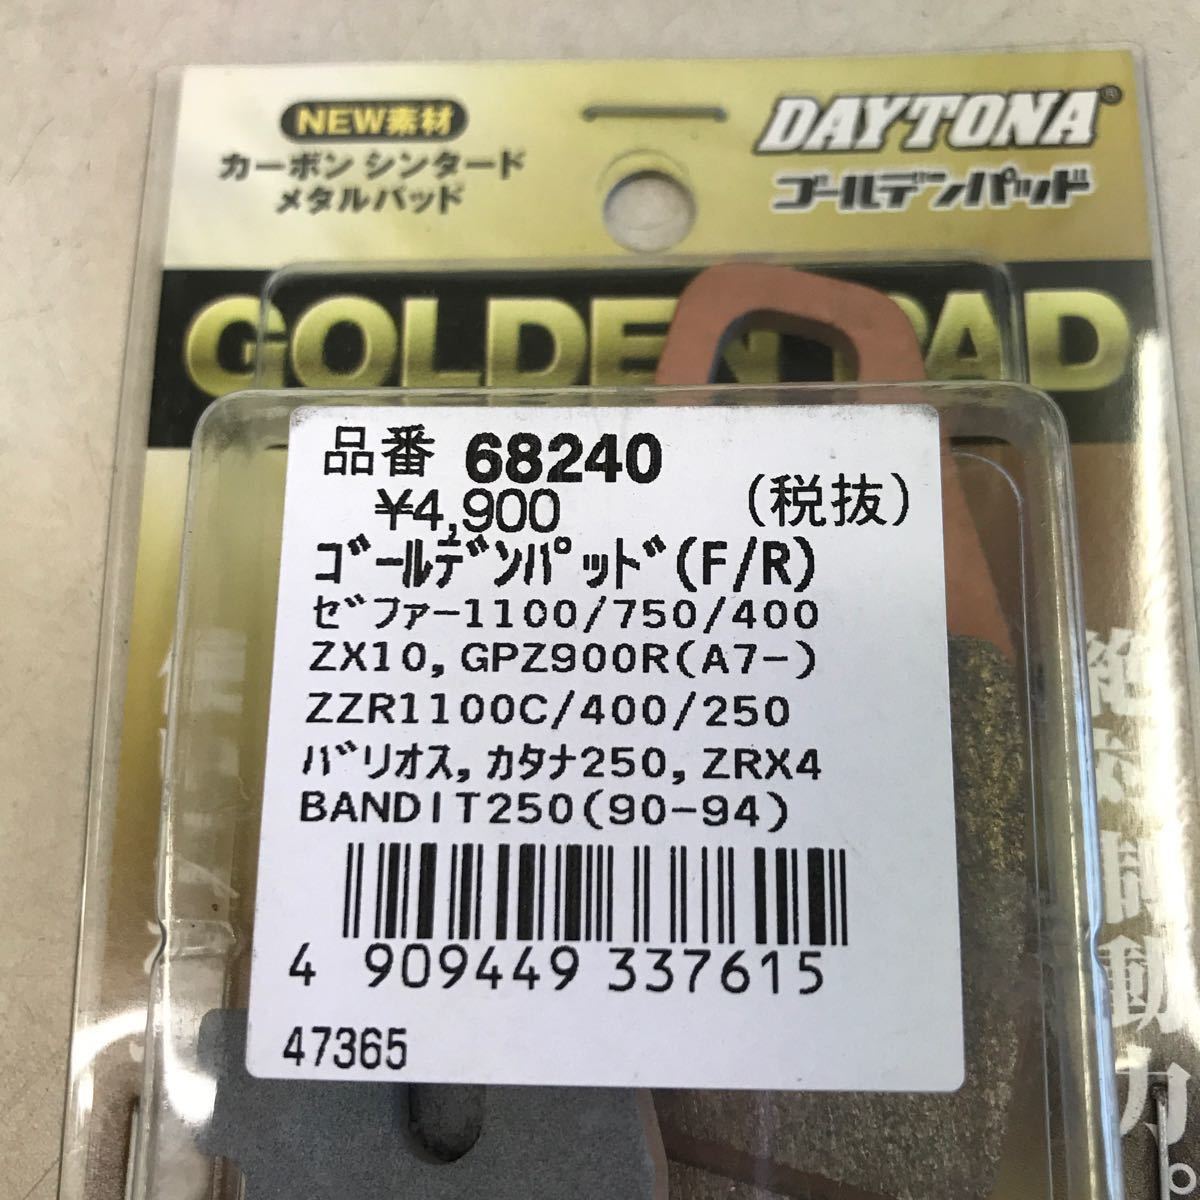 2-14575* Daytona Golden pad 68240* Zephyr 1100 750 400 ZX10 GPZ900R ZZR1100C 400 250 Balius Katana 250 Bandit 250